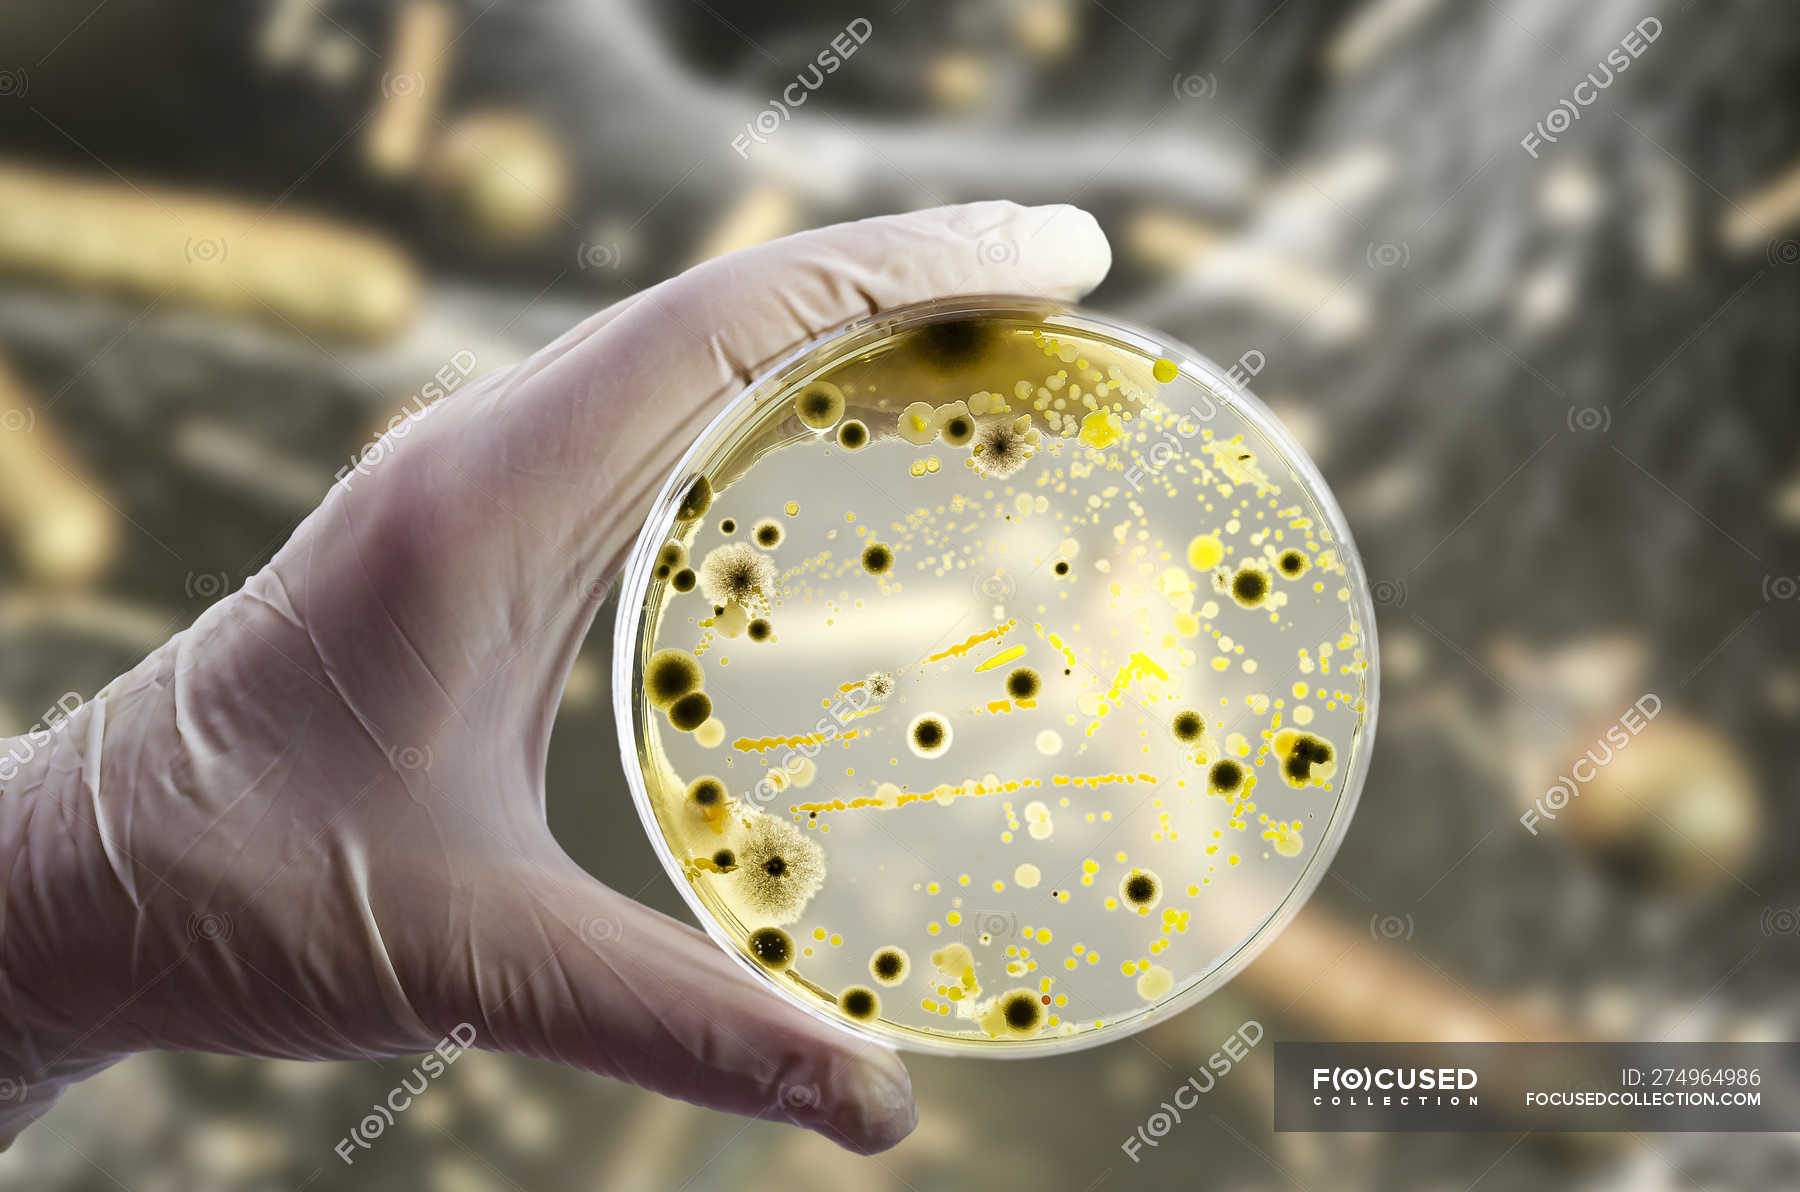 Культура бактерий в чашке Петри